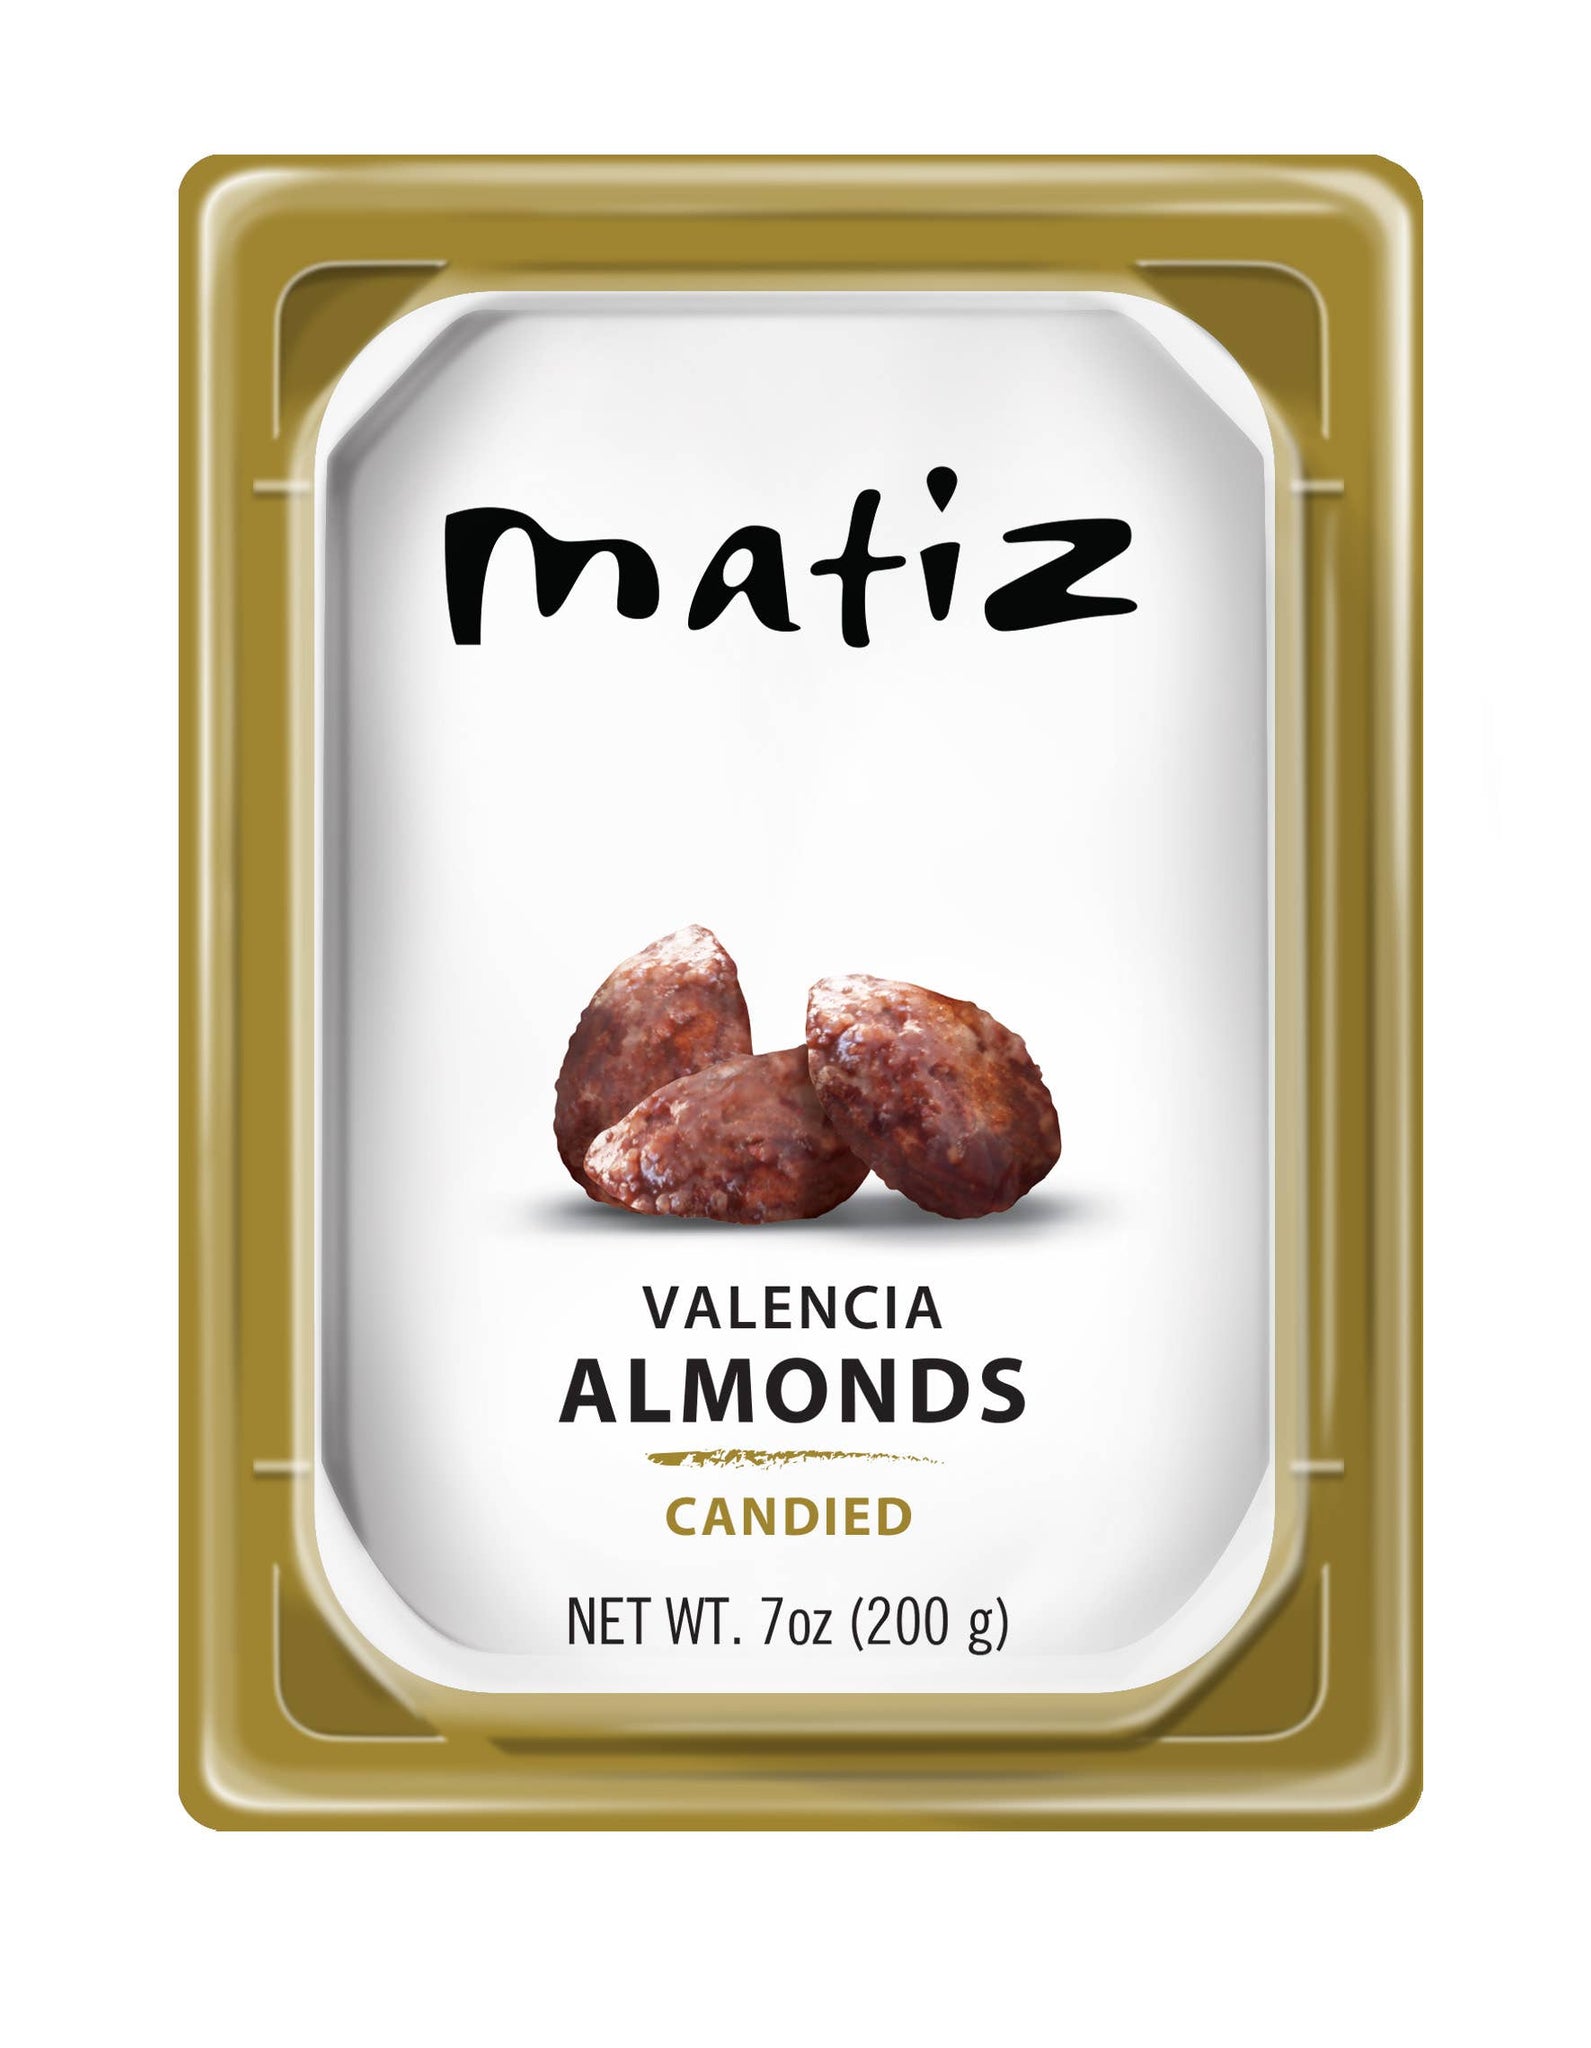 Matiz Valencian nut trays - Truffle, herbed, plain & candied: Truffle